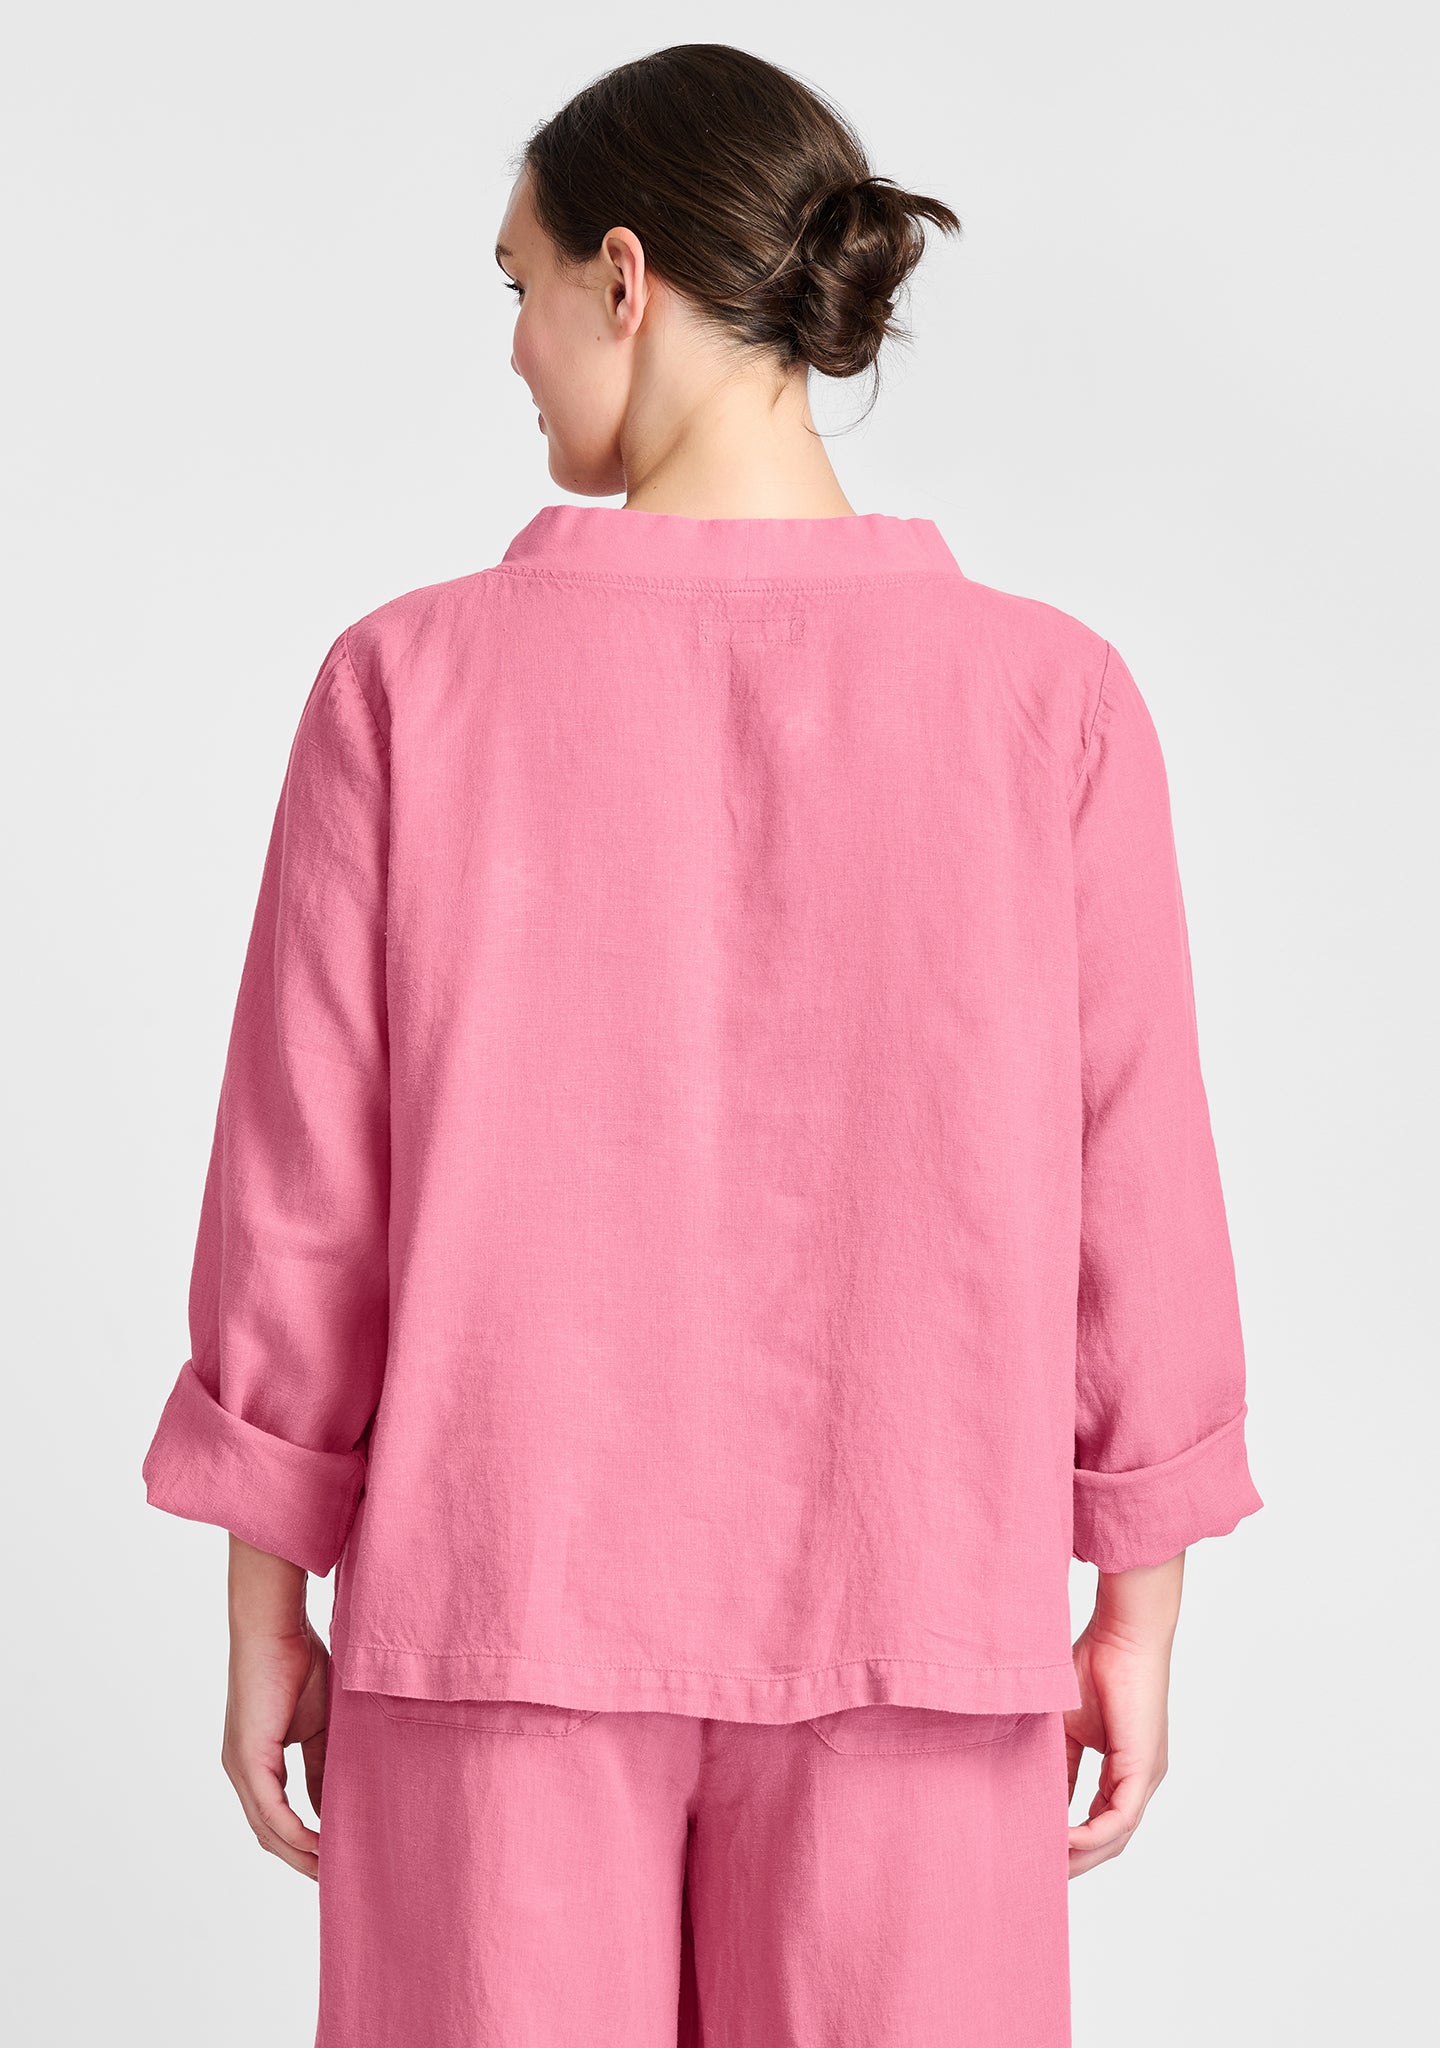 chelsea pullover long sleeve linen shirt details